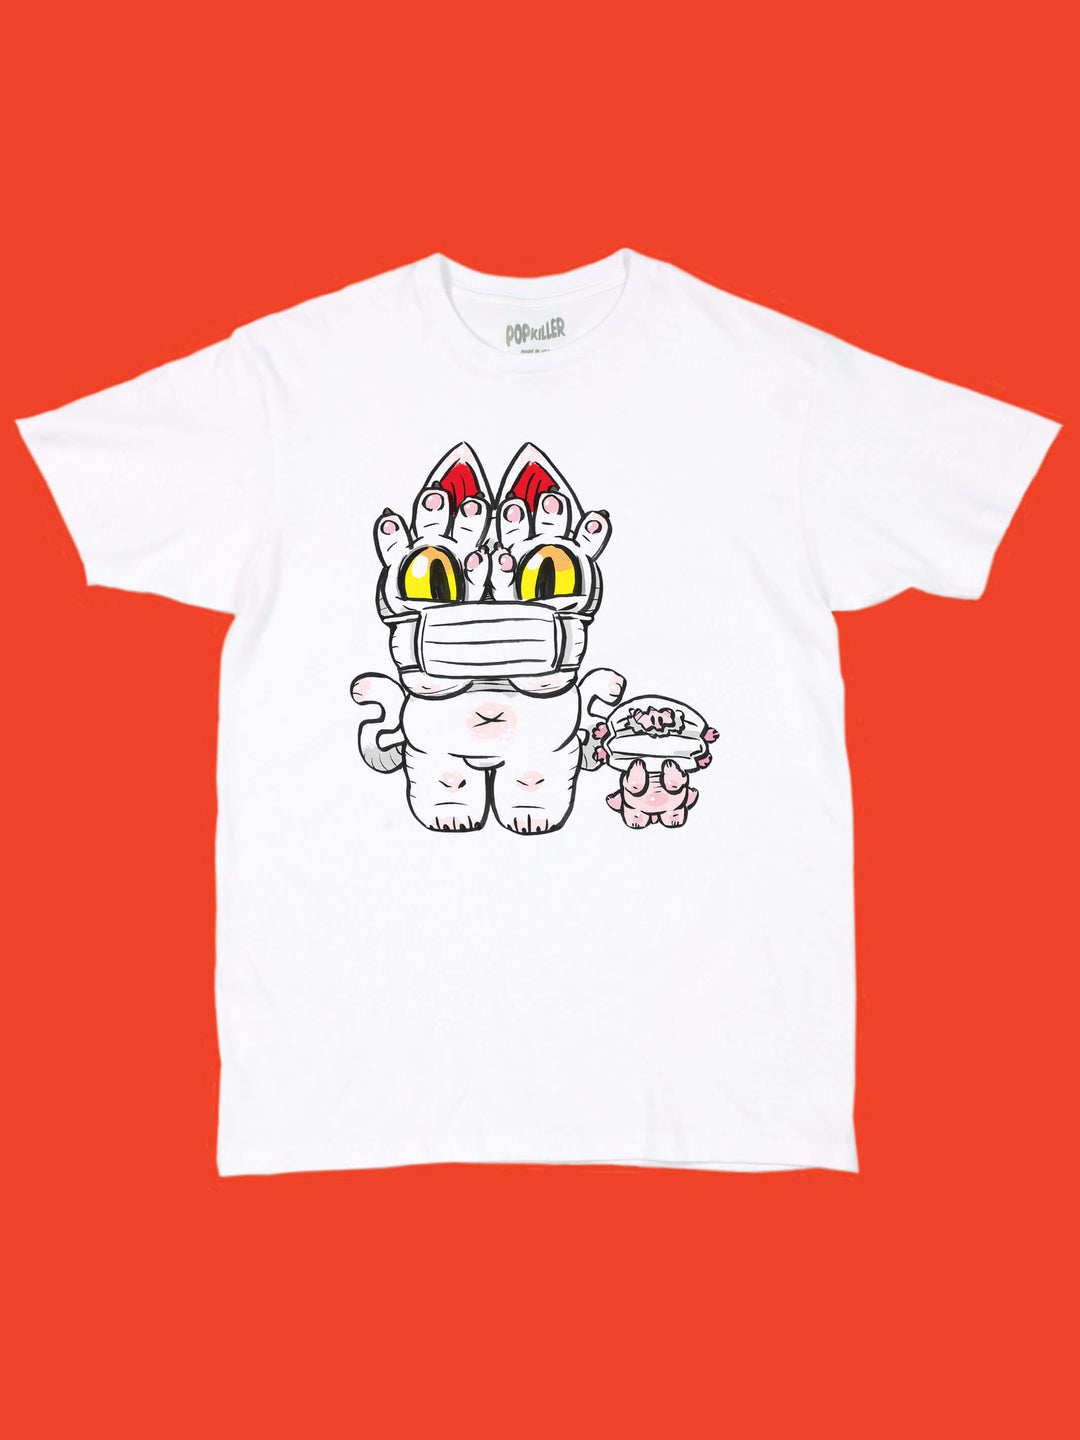 Masked cat graphic t-shirt by anime artist Grape Brain.